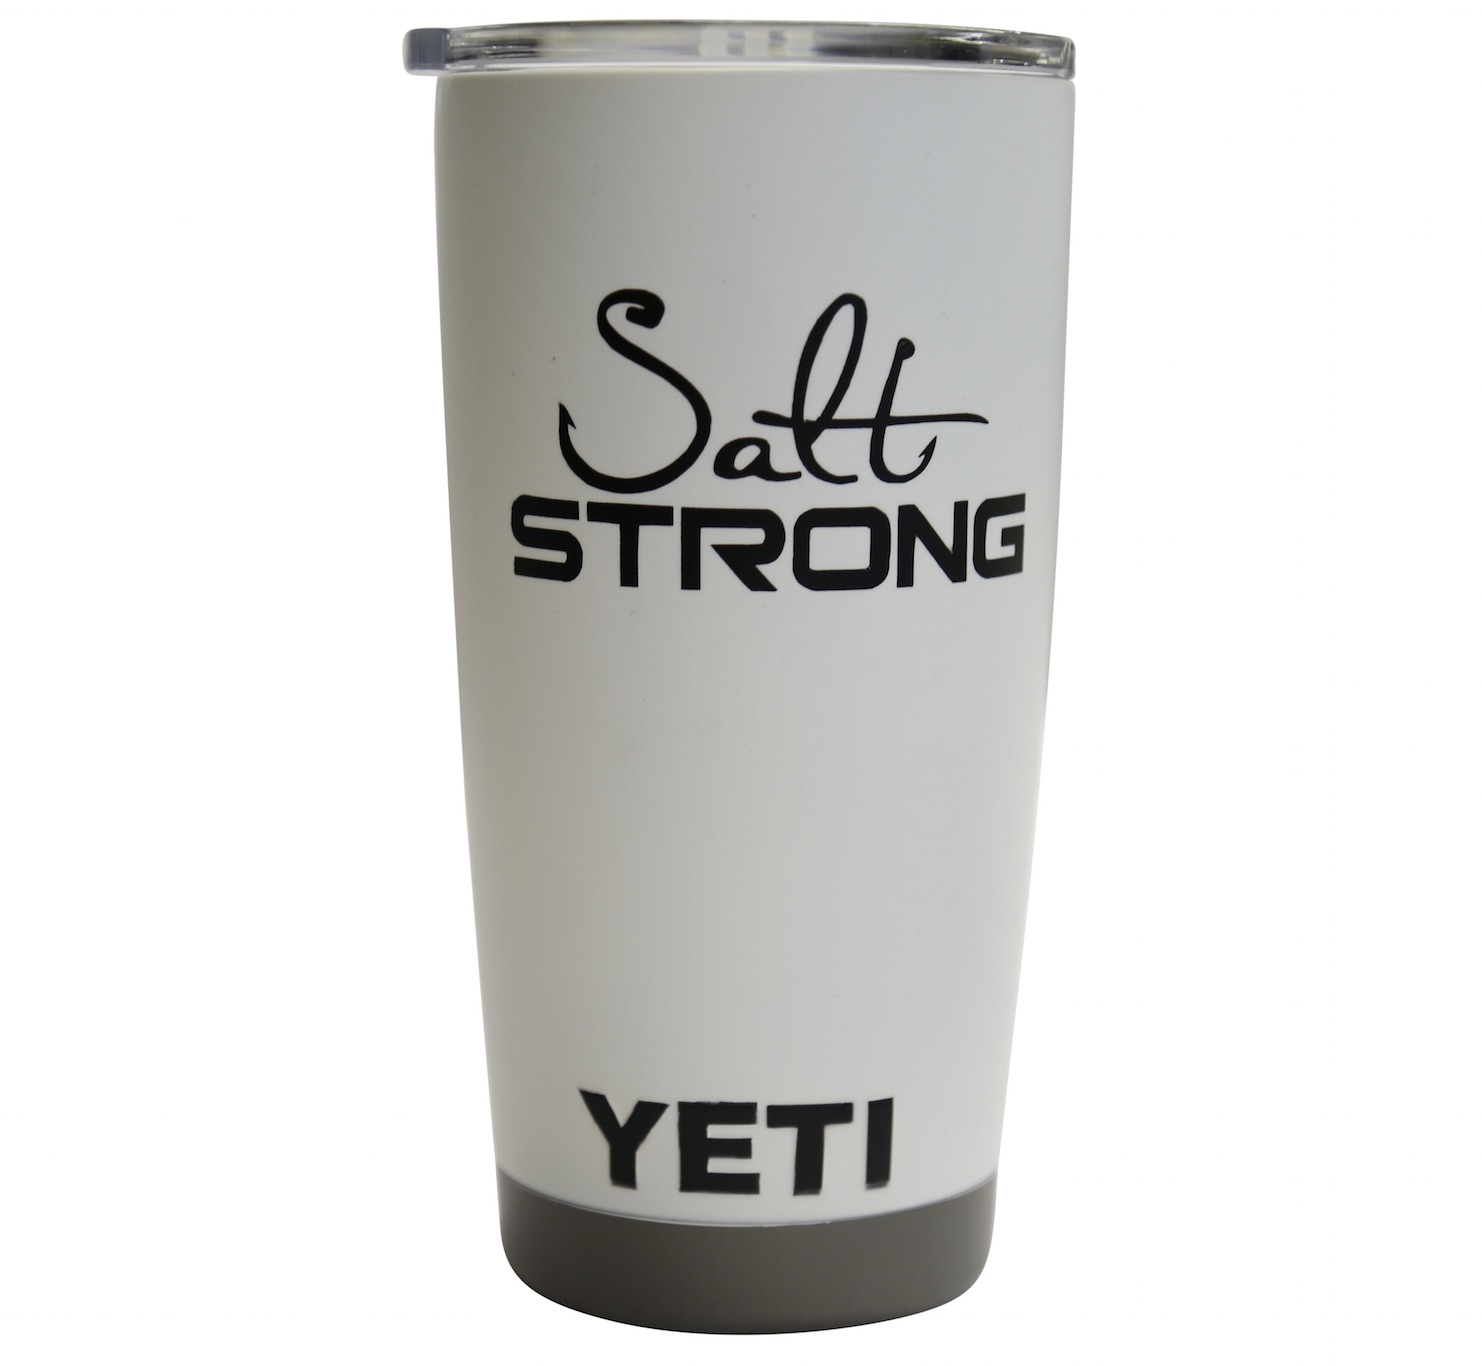 yeti salt strong cup